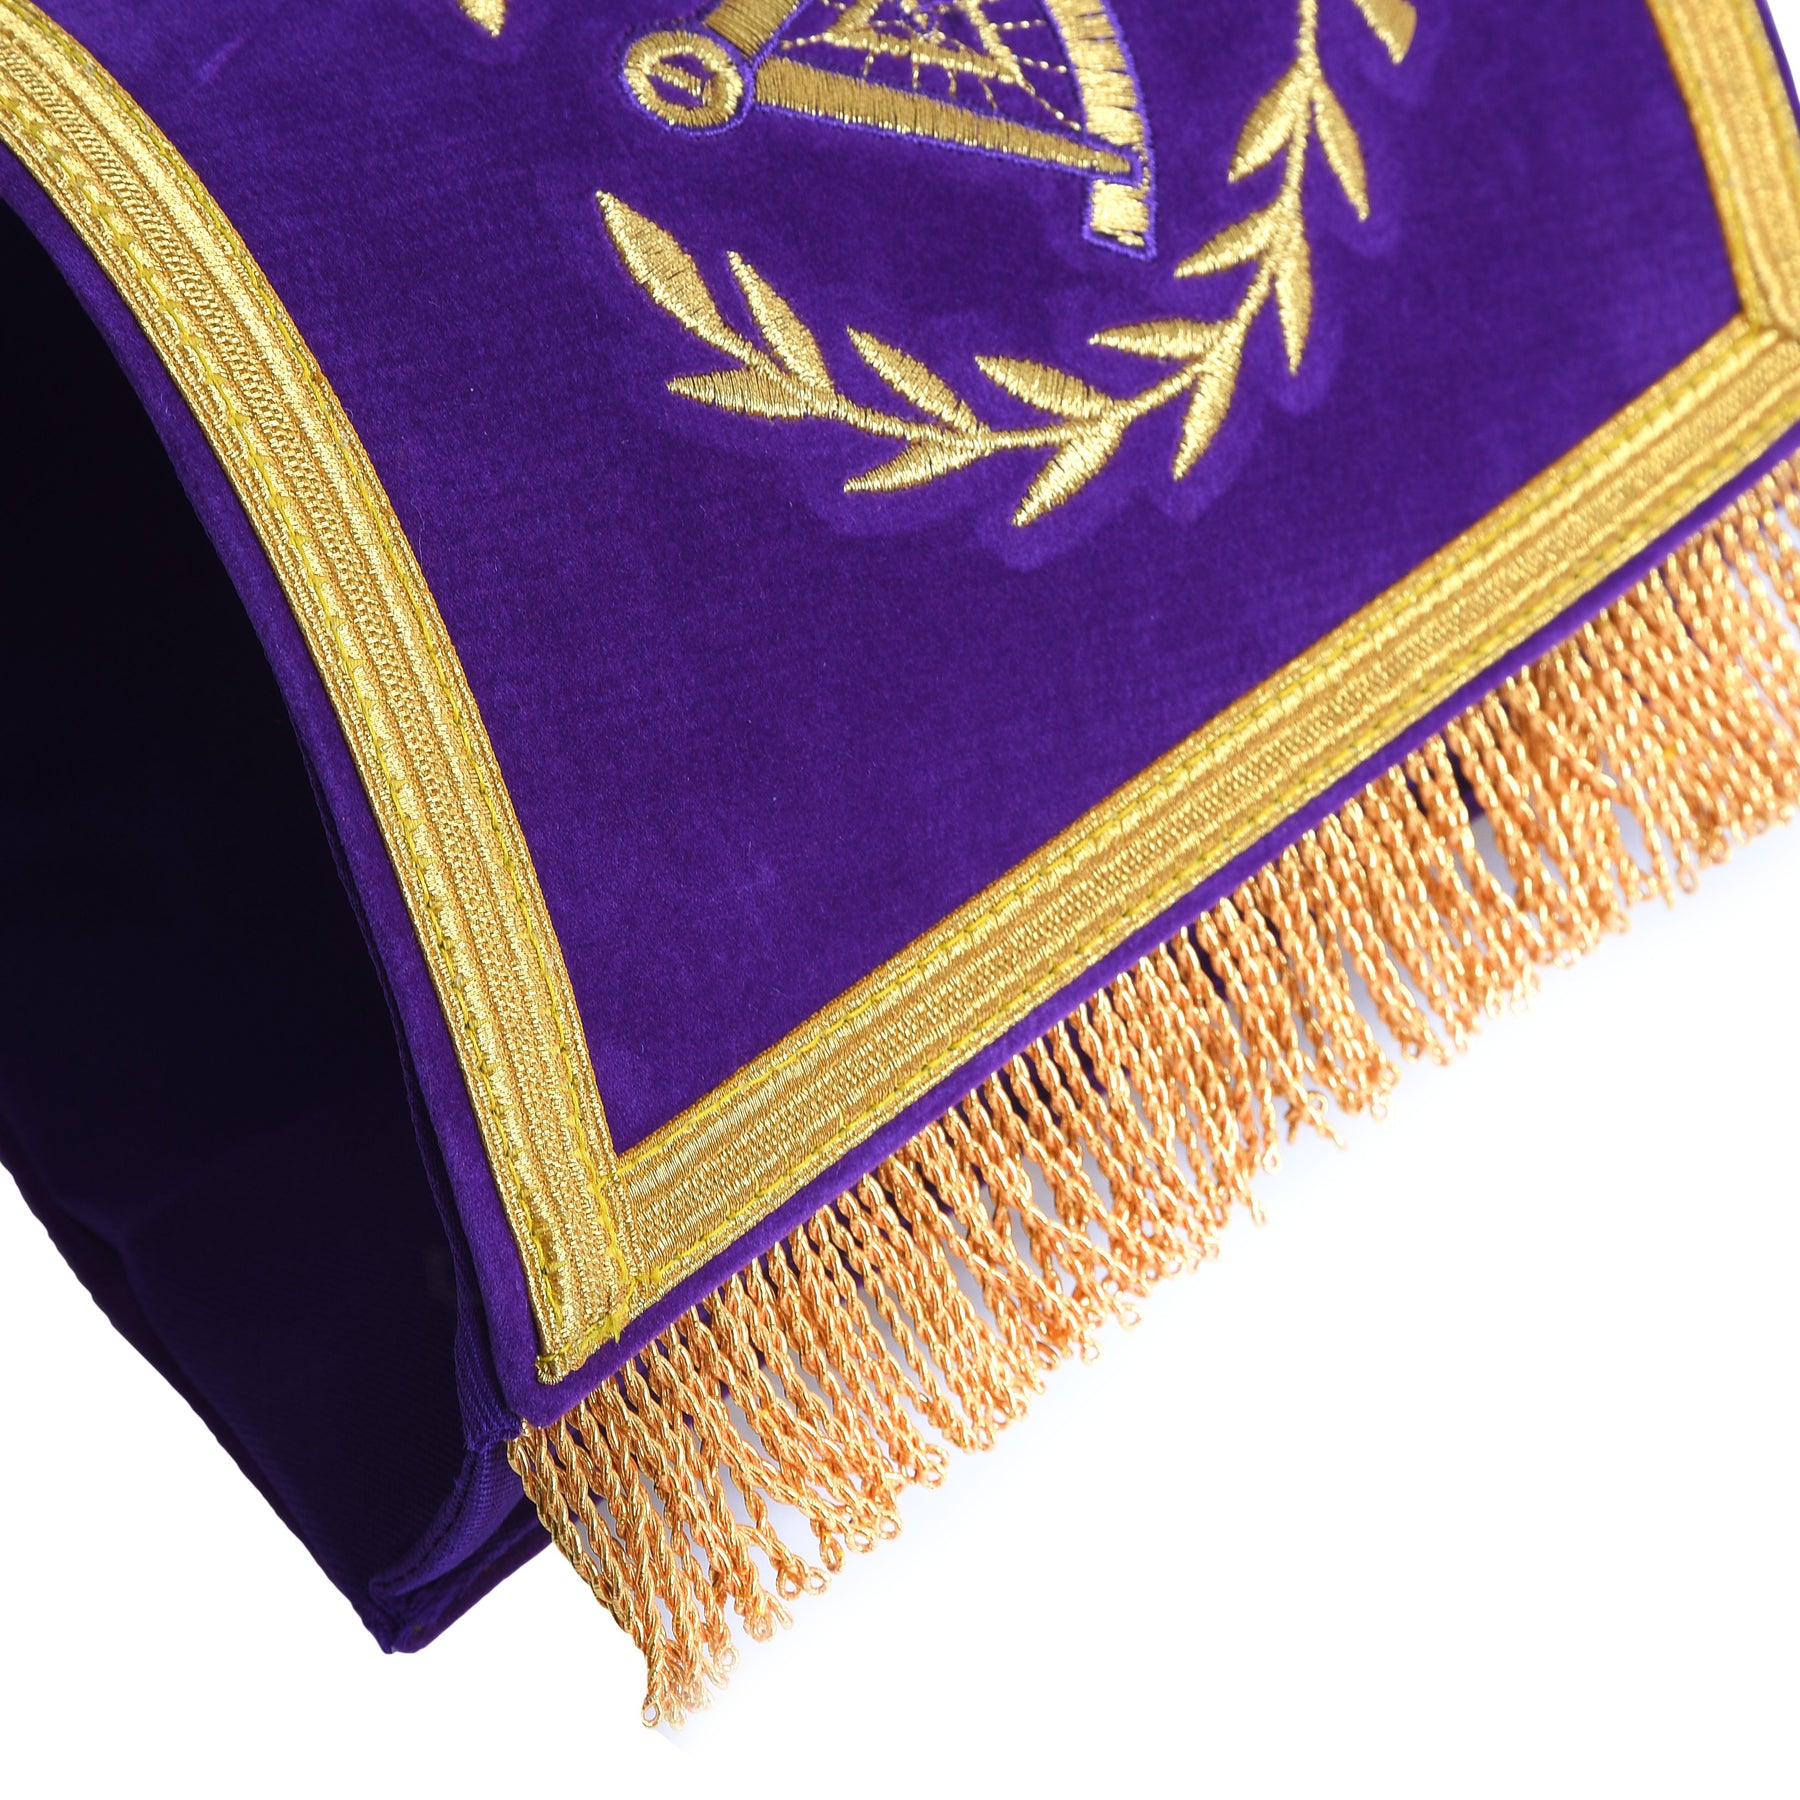 Grand Master Blue Lodge Cuff - Purple Hand Embroidery With Fringe - Bricks Masons